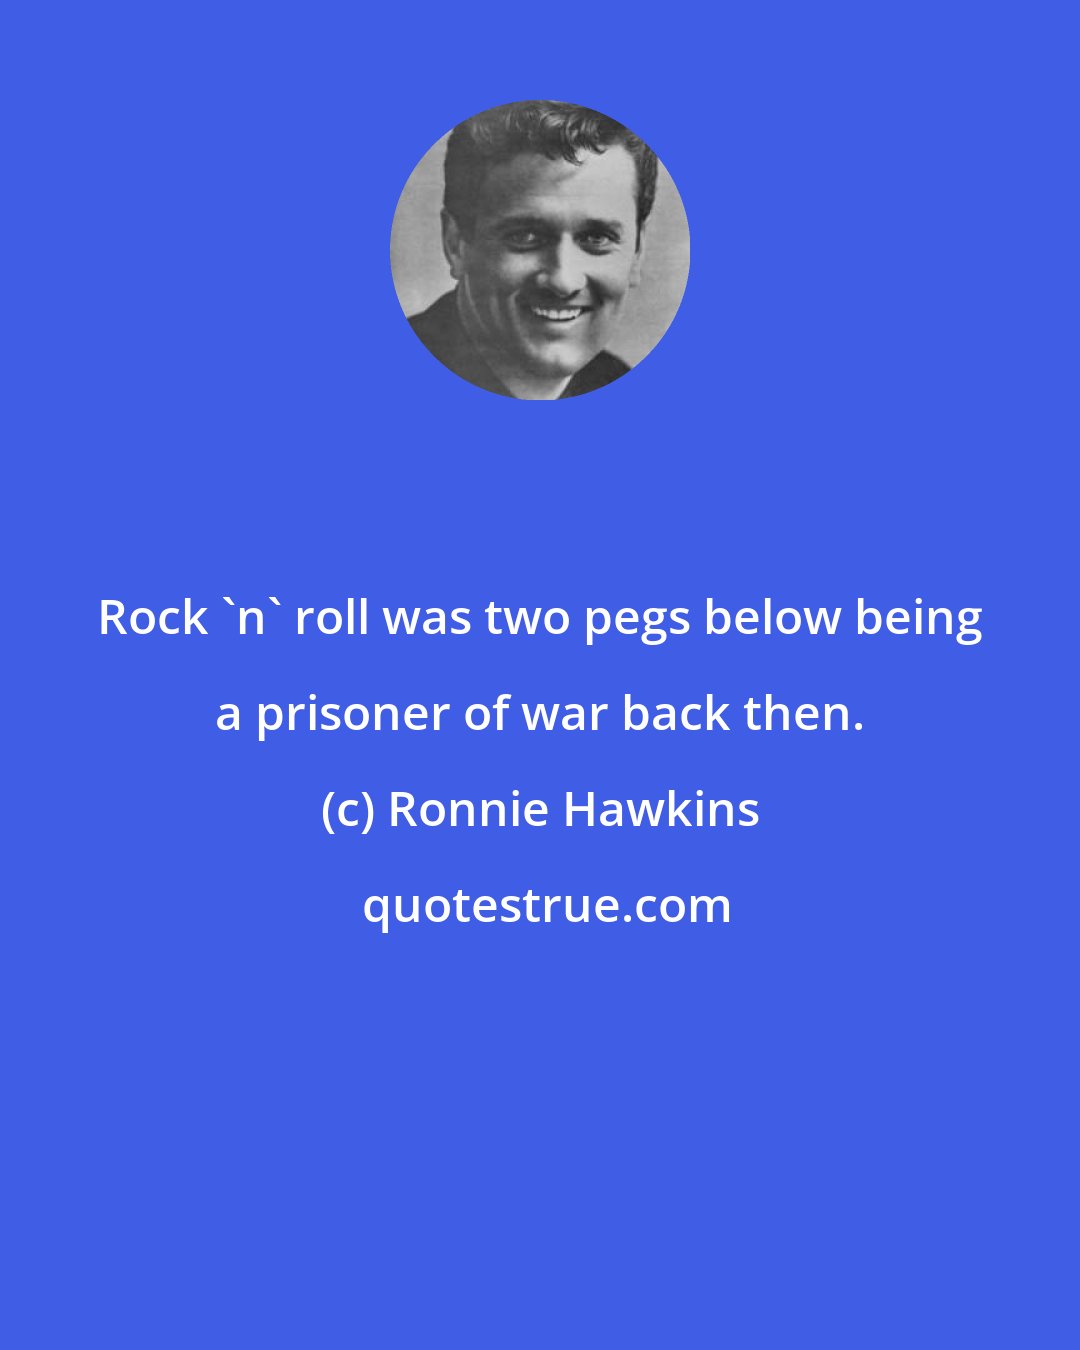 Ronnie Hawkins: Rock 'n' roll was two pegs below being a prisoner of war back then.